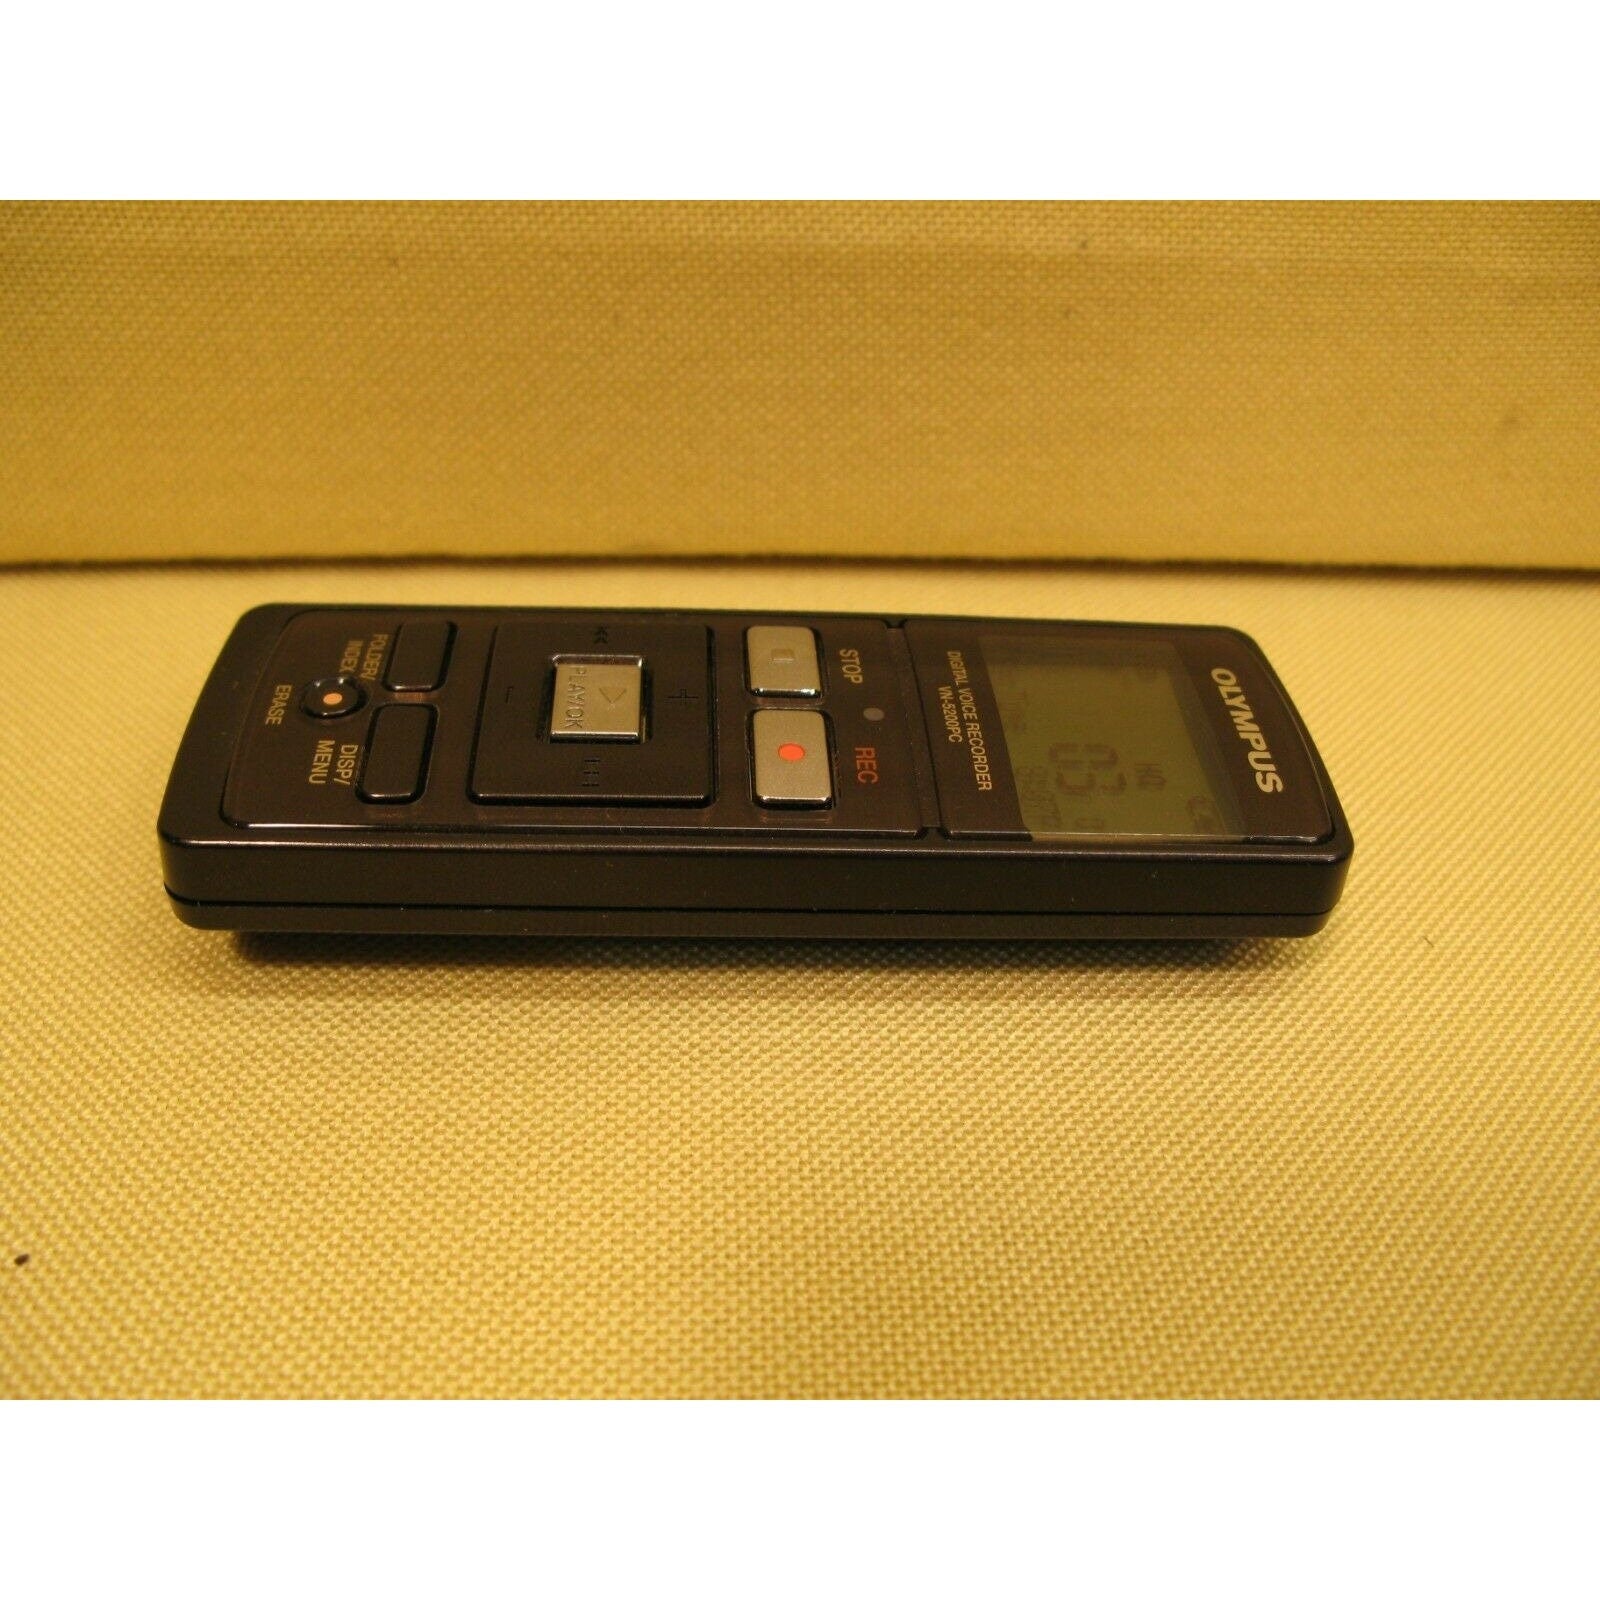 Olympus VN-5200PC (512 MB, 221.5 Hours) Handheld Digital Voice Recorder